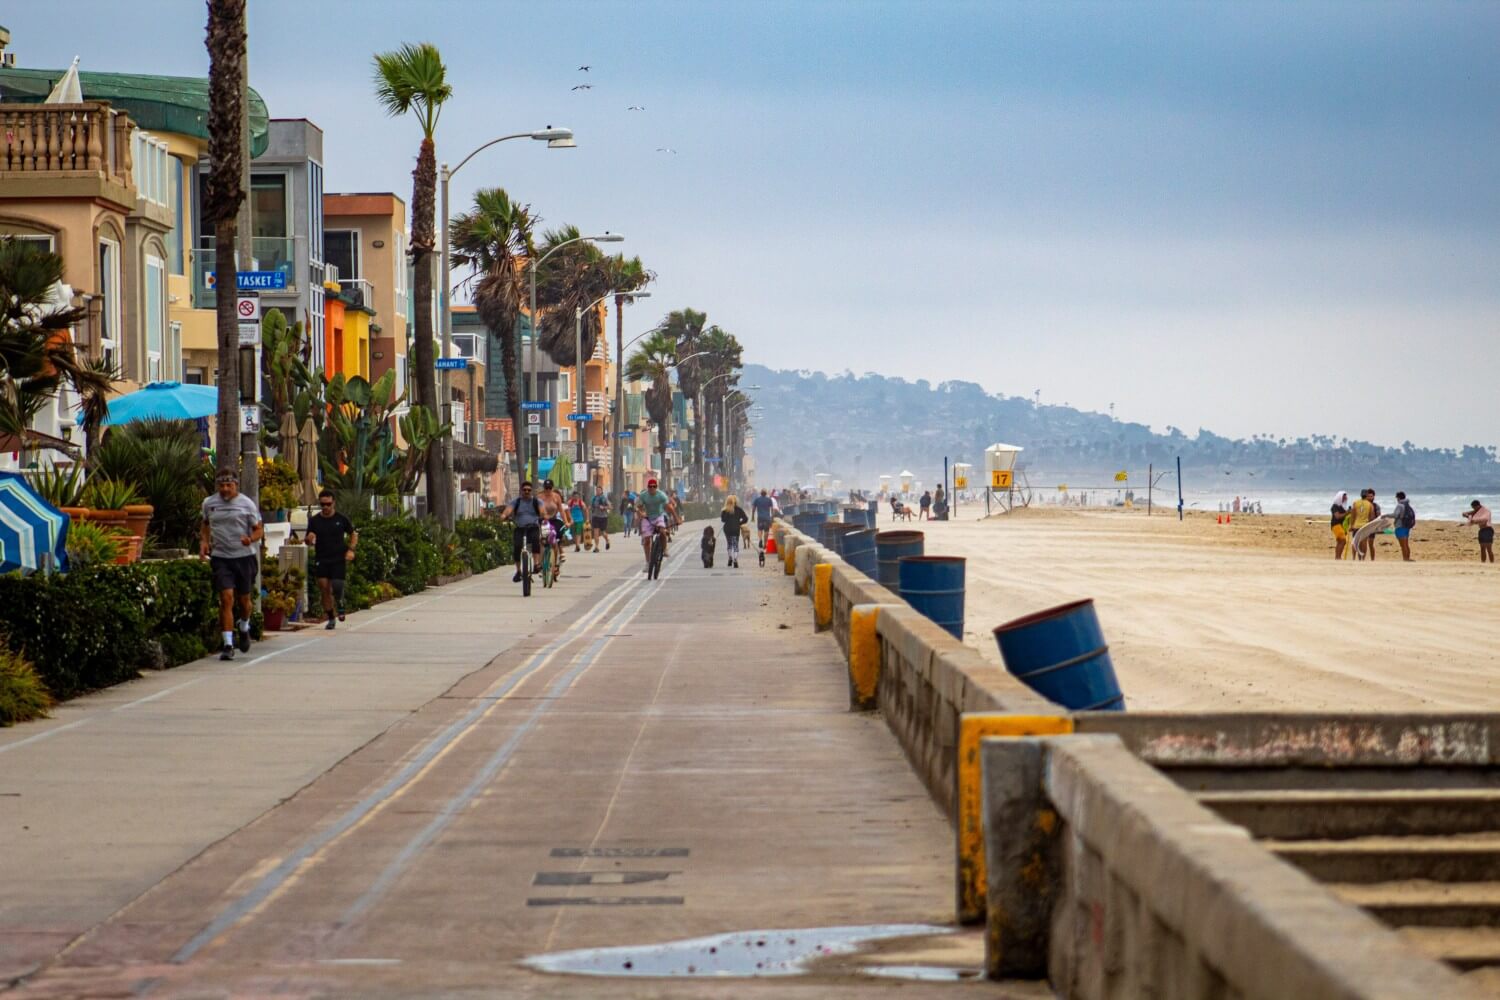 The Mission Beach boardwalk in San Diego by day